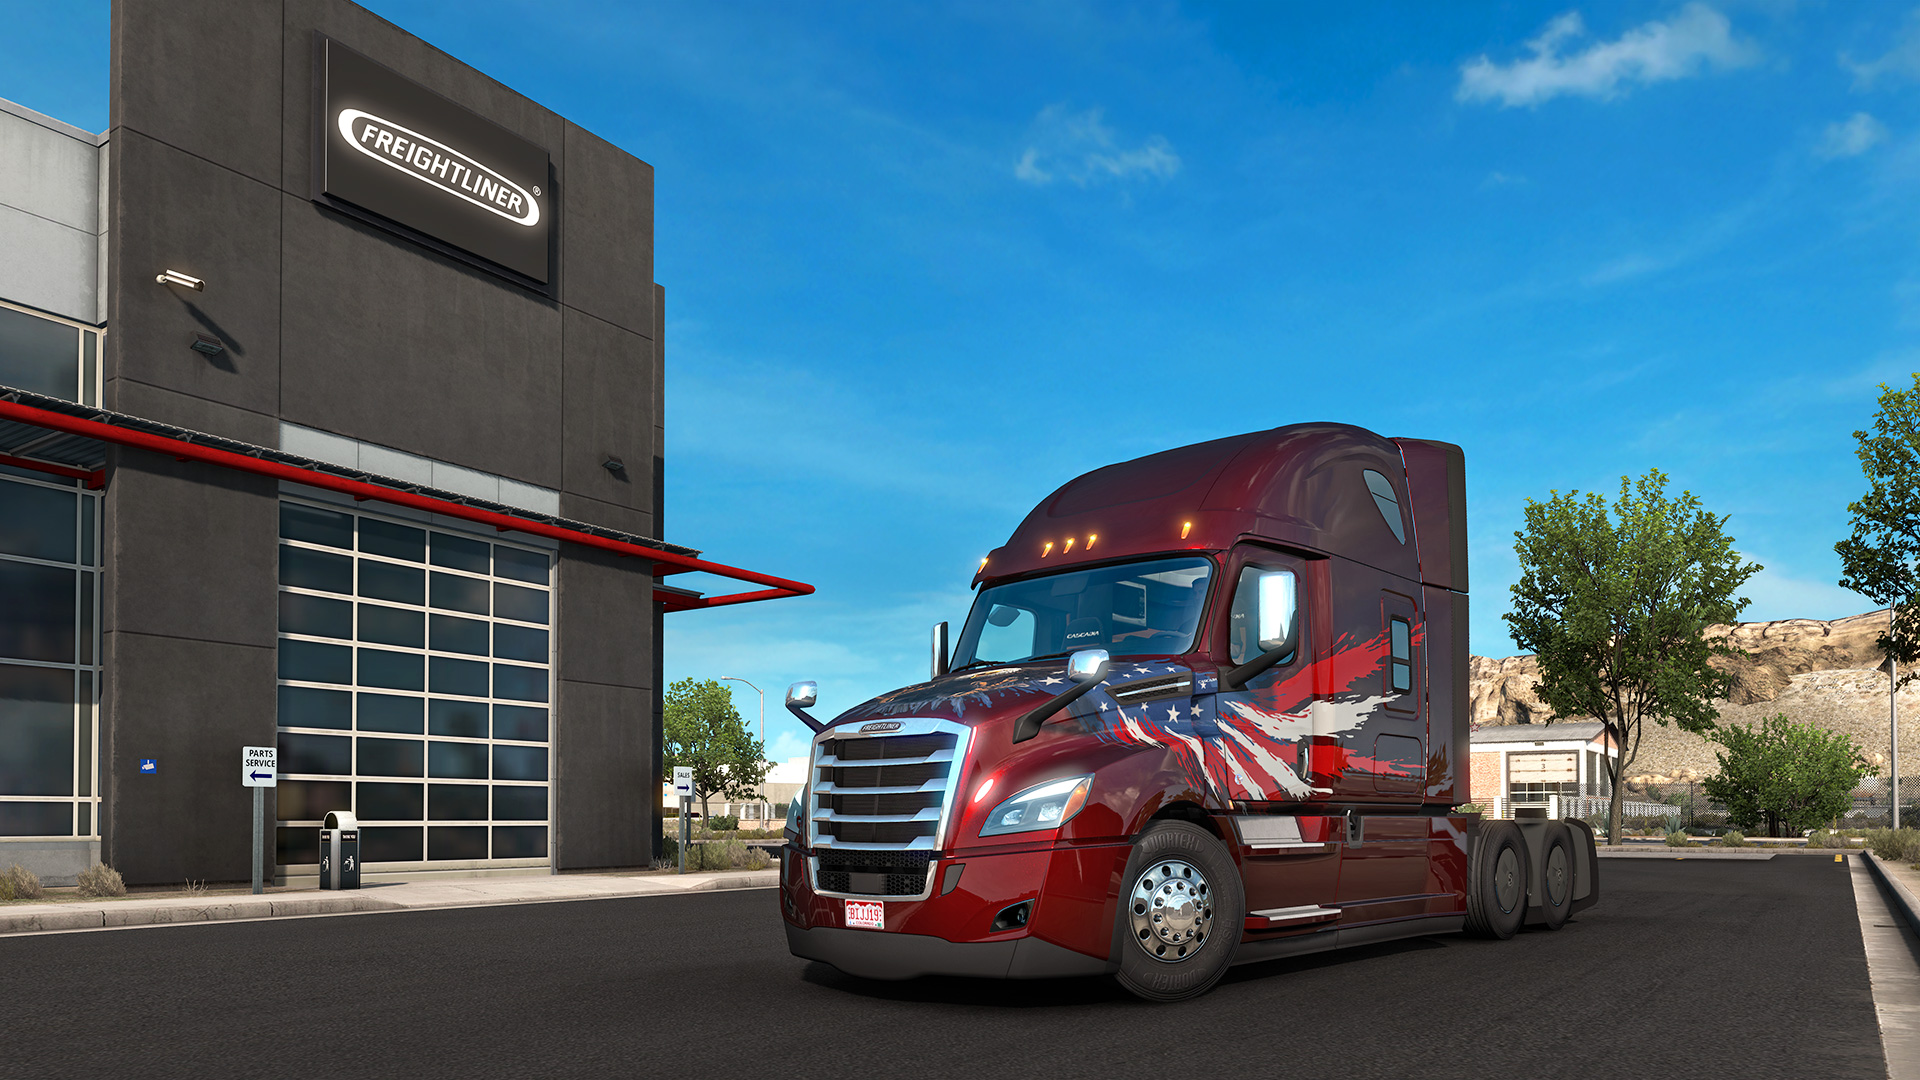 american truck simulator trainer 1.34